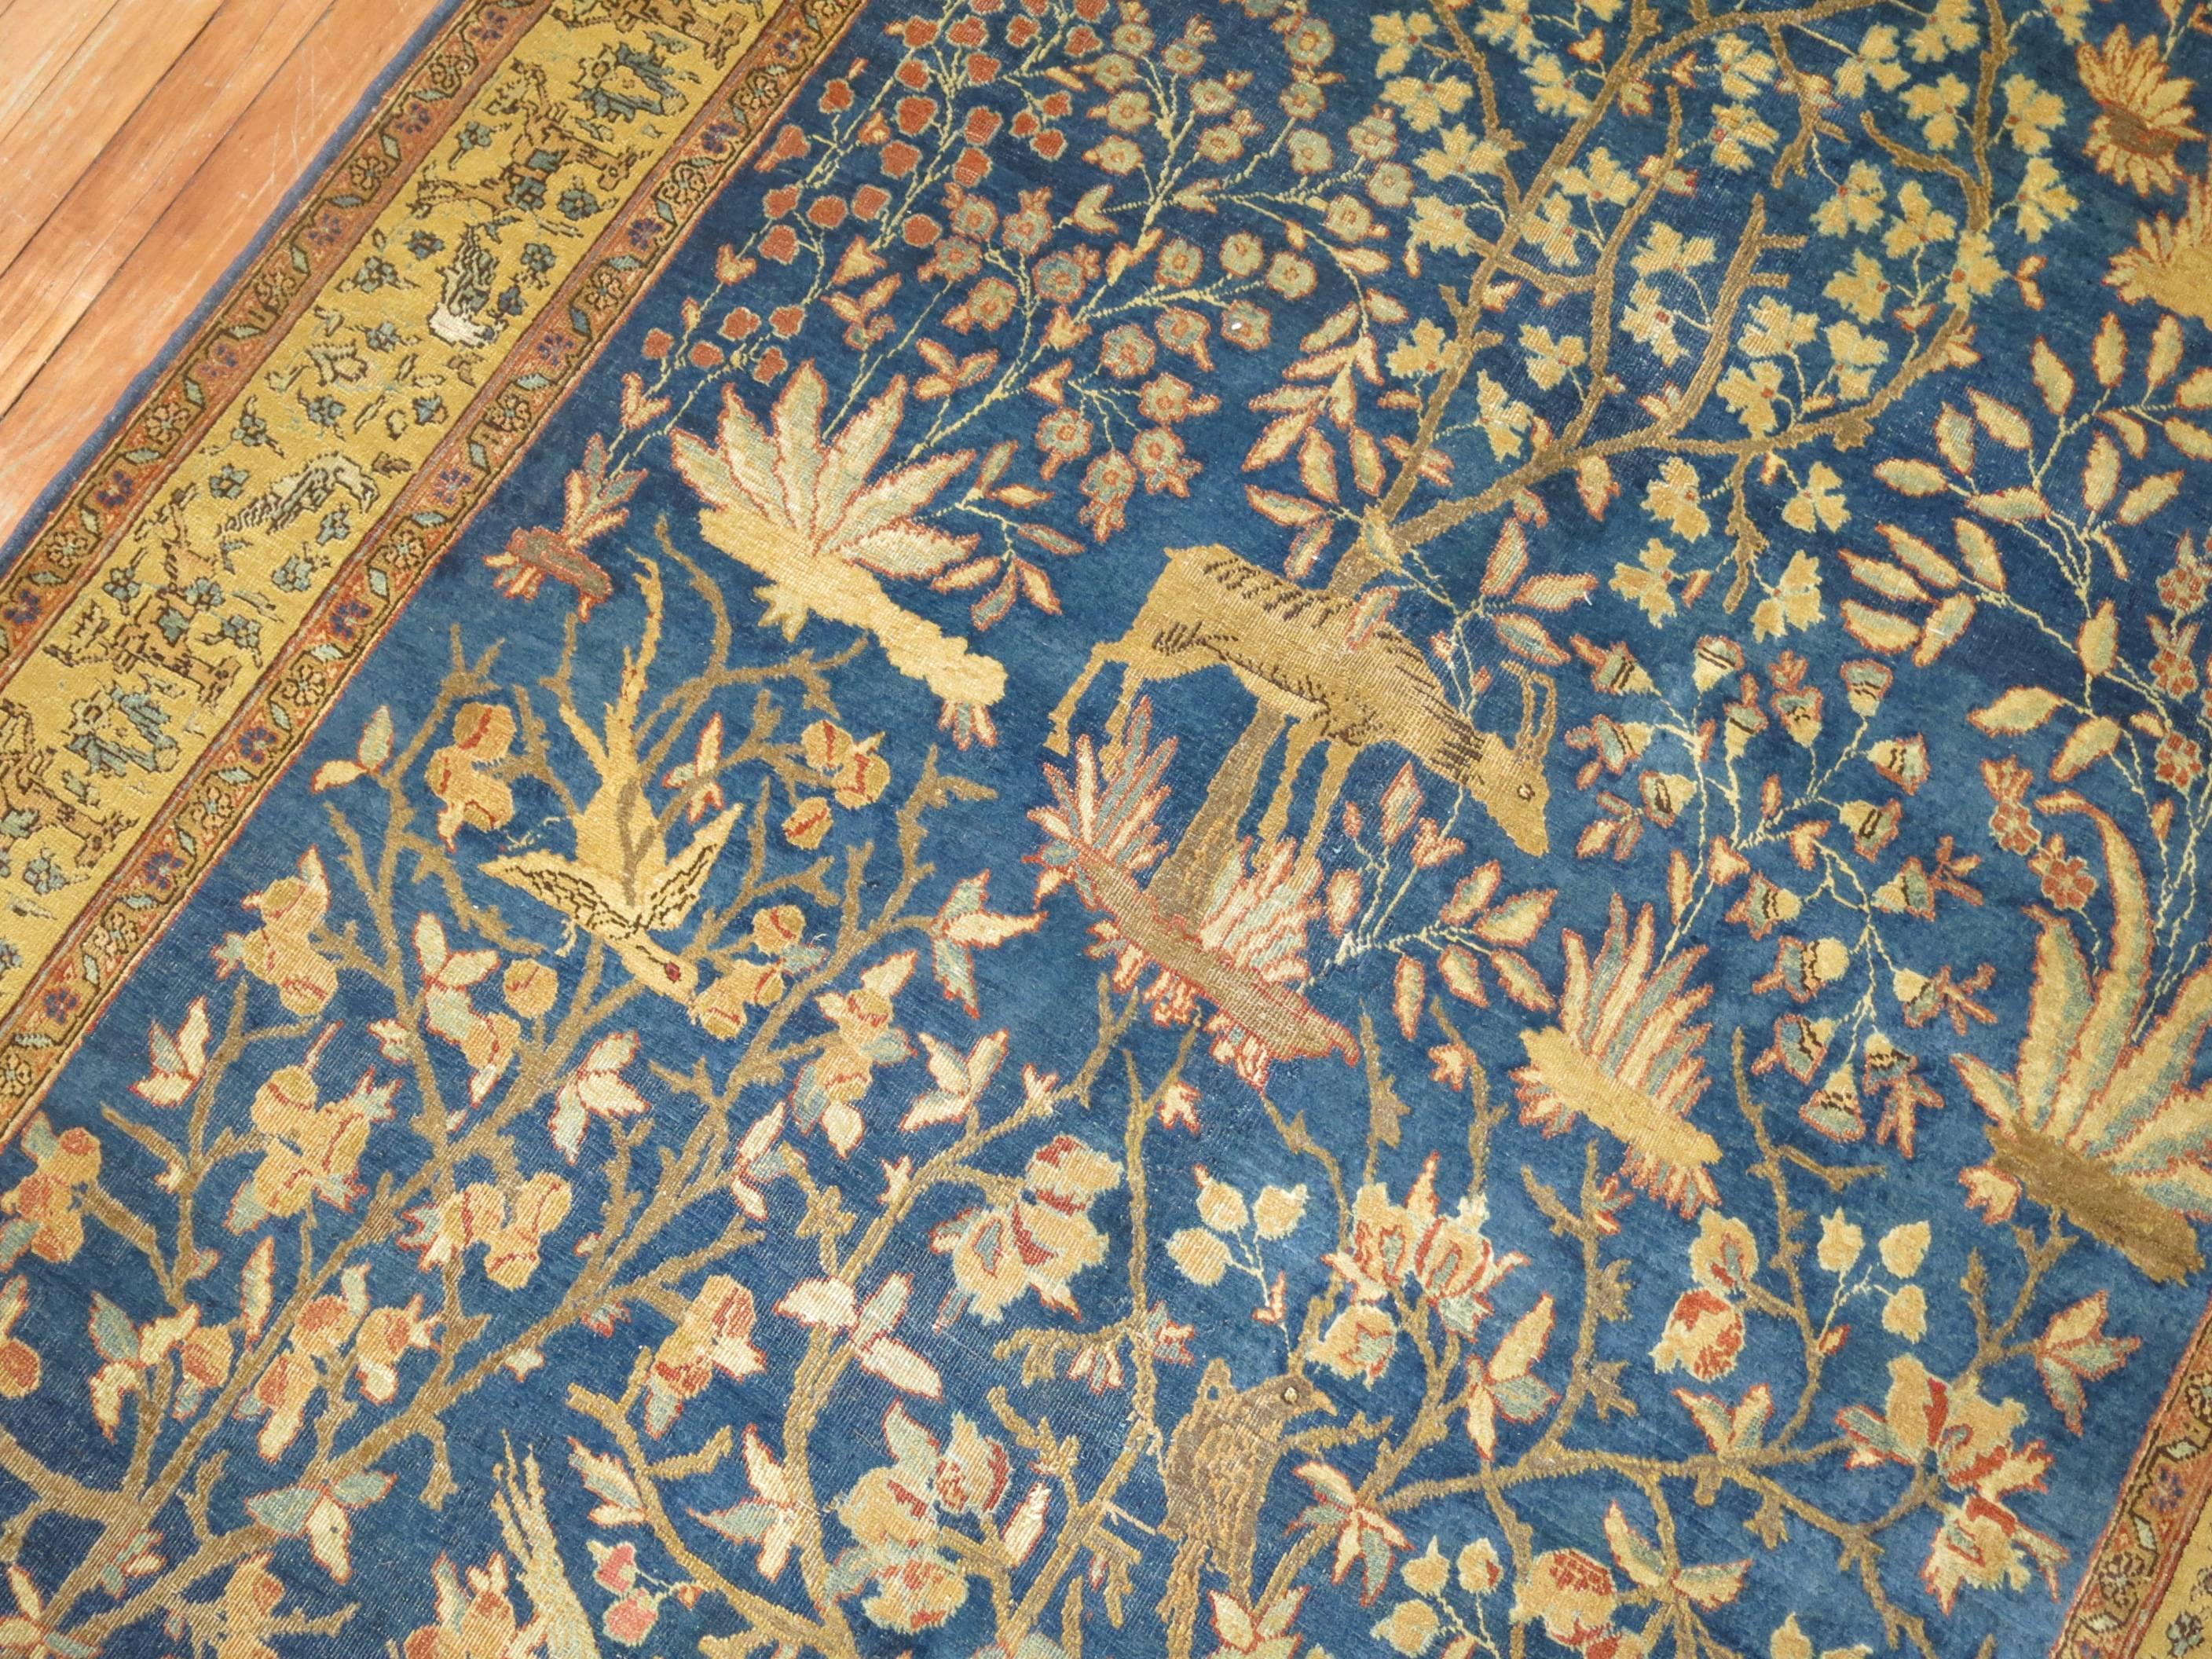 Wool Pictorial Antique Persian Tabriz Carpet in Blue